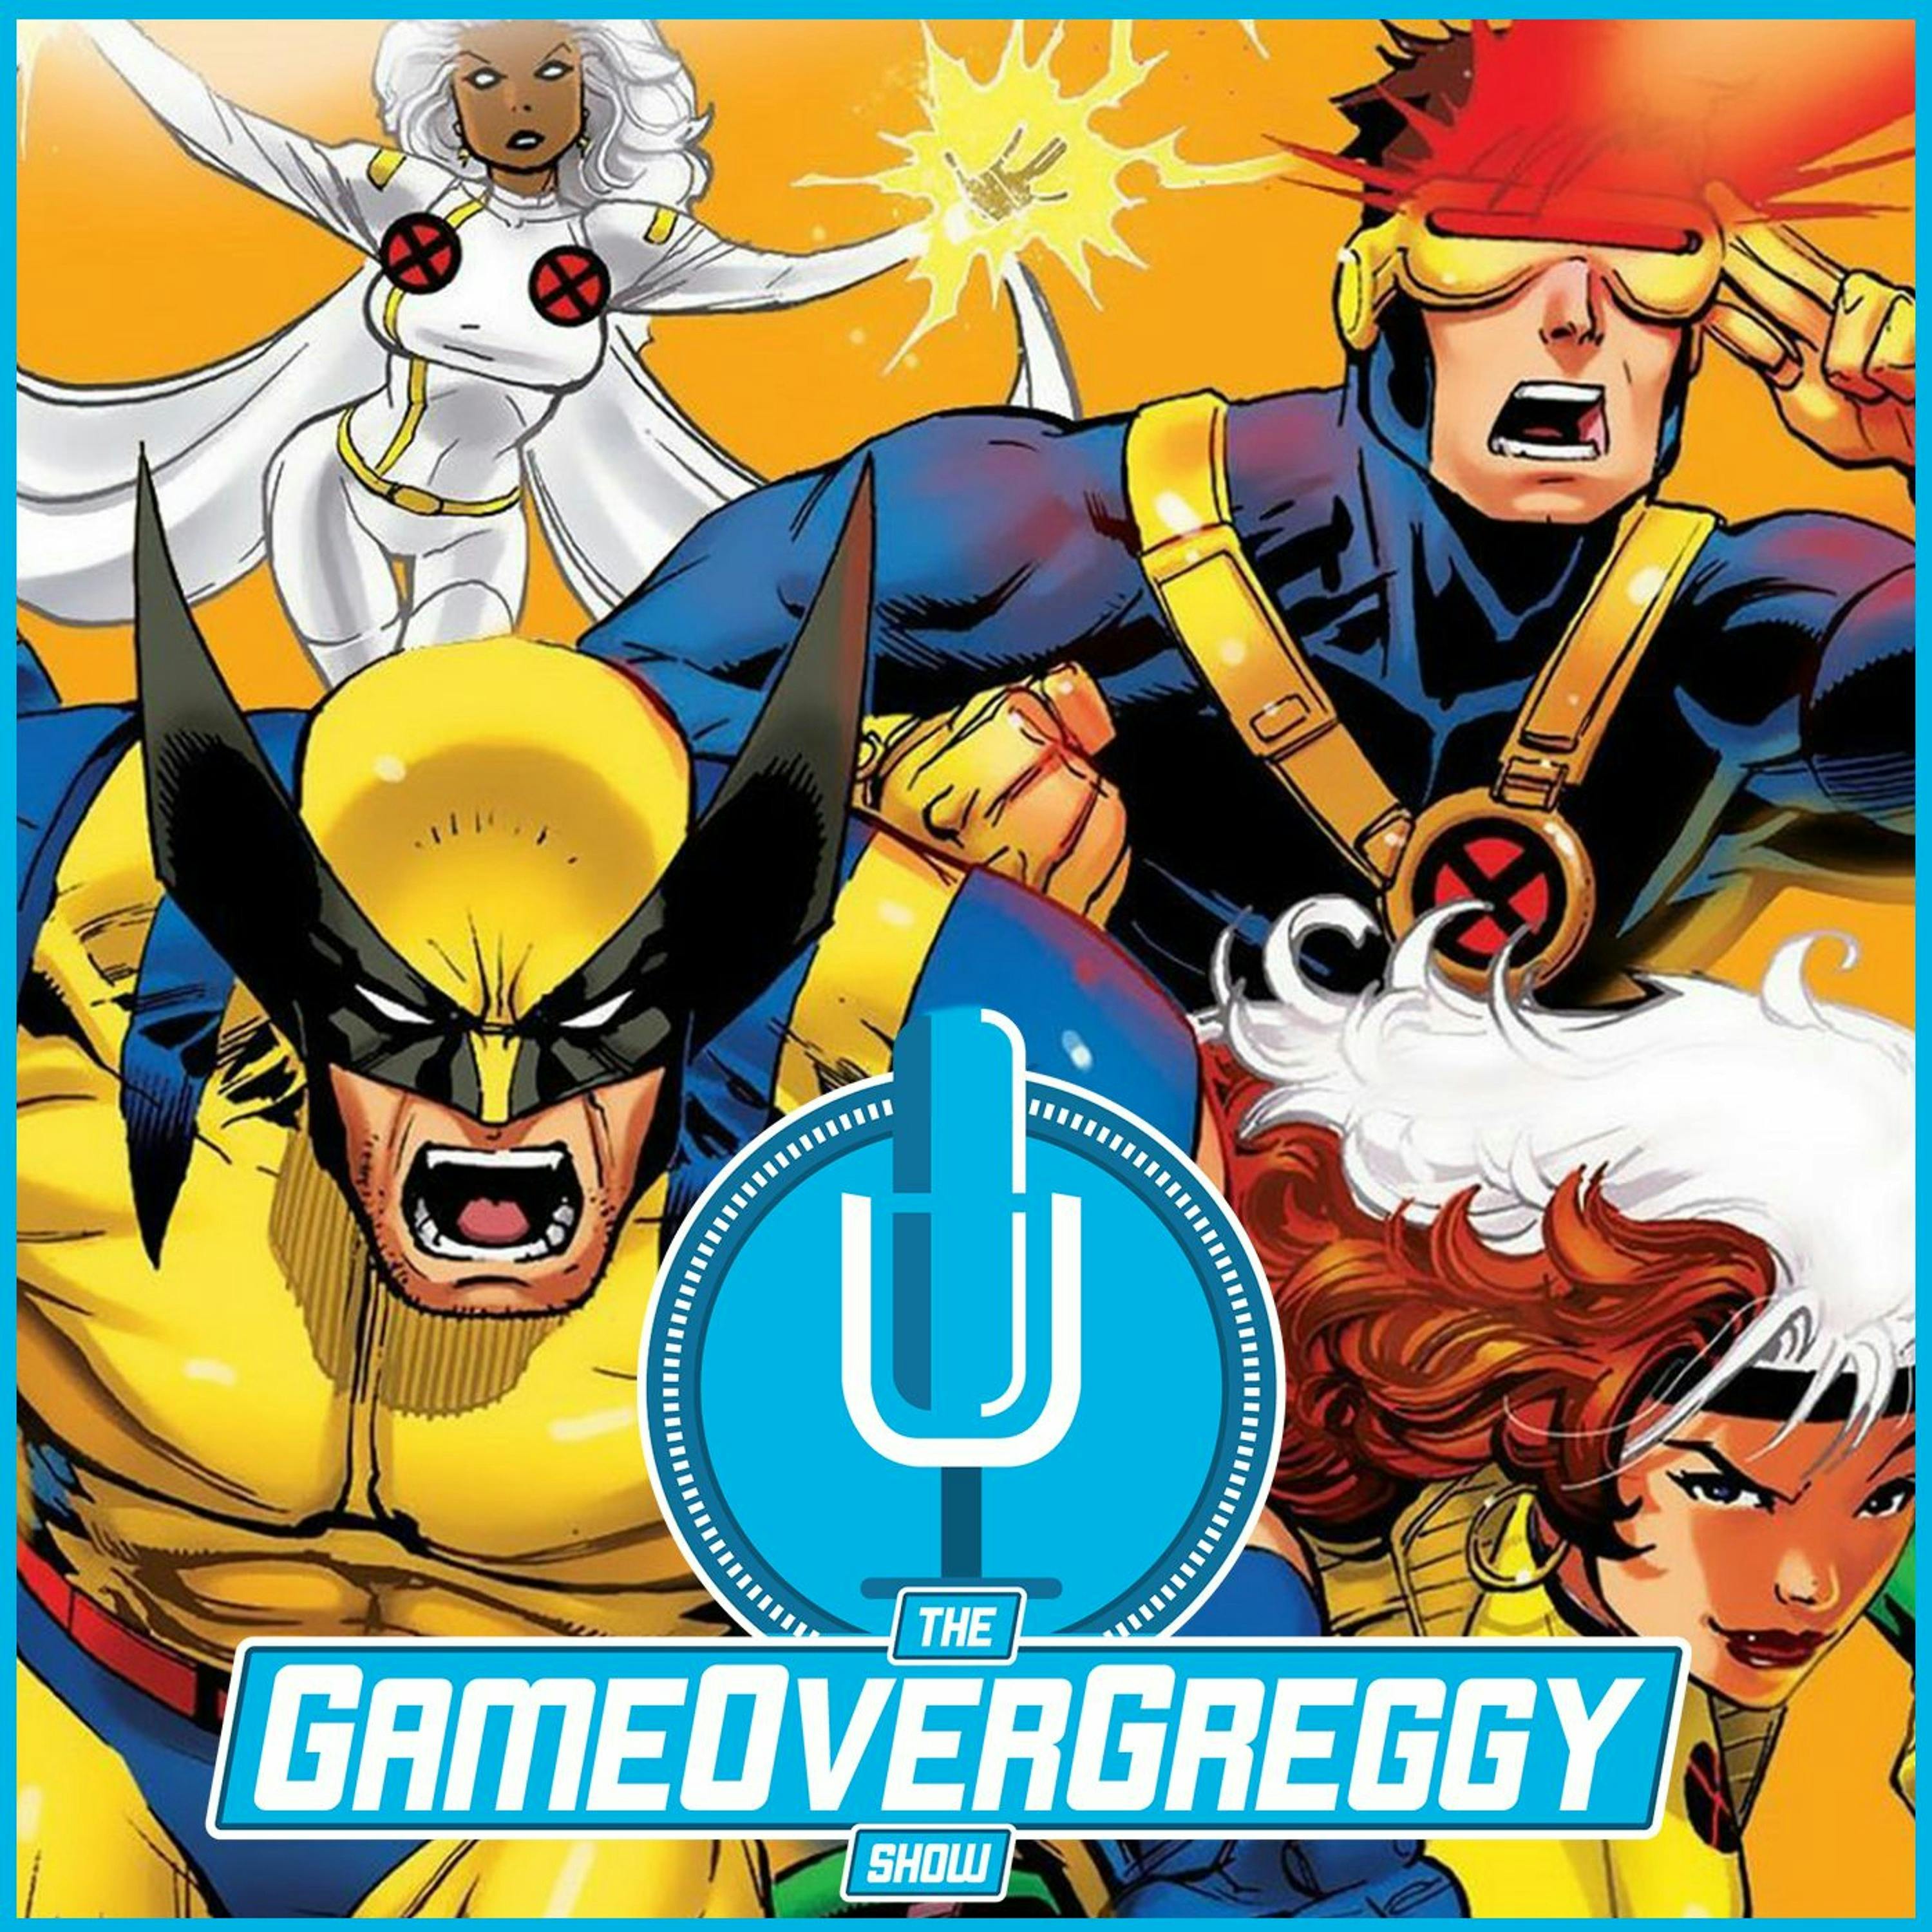 X-Men Finally In MCU - The GameOverGreggy Show Ep. 212